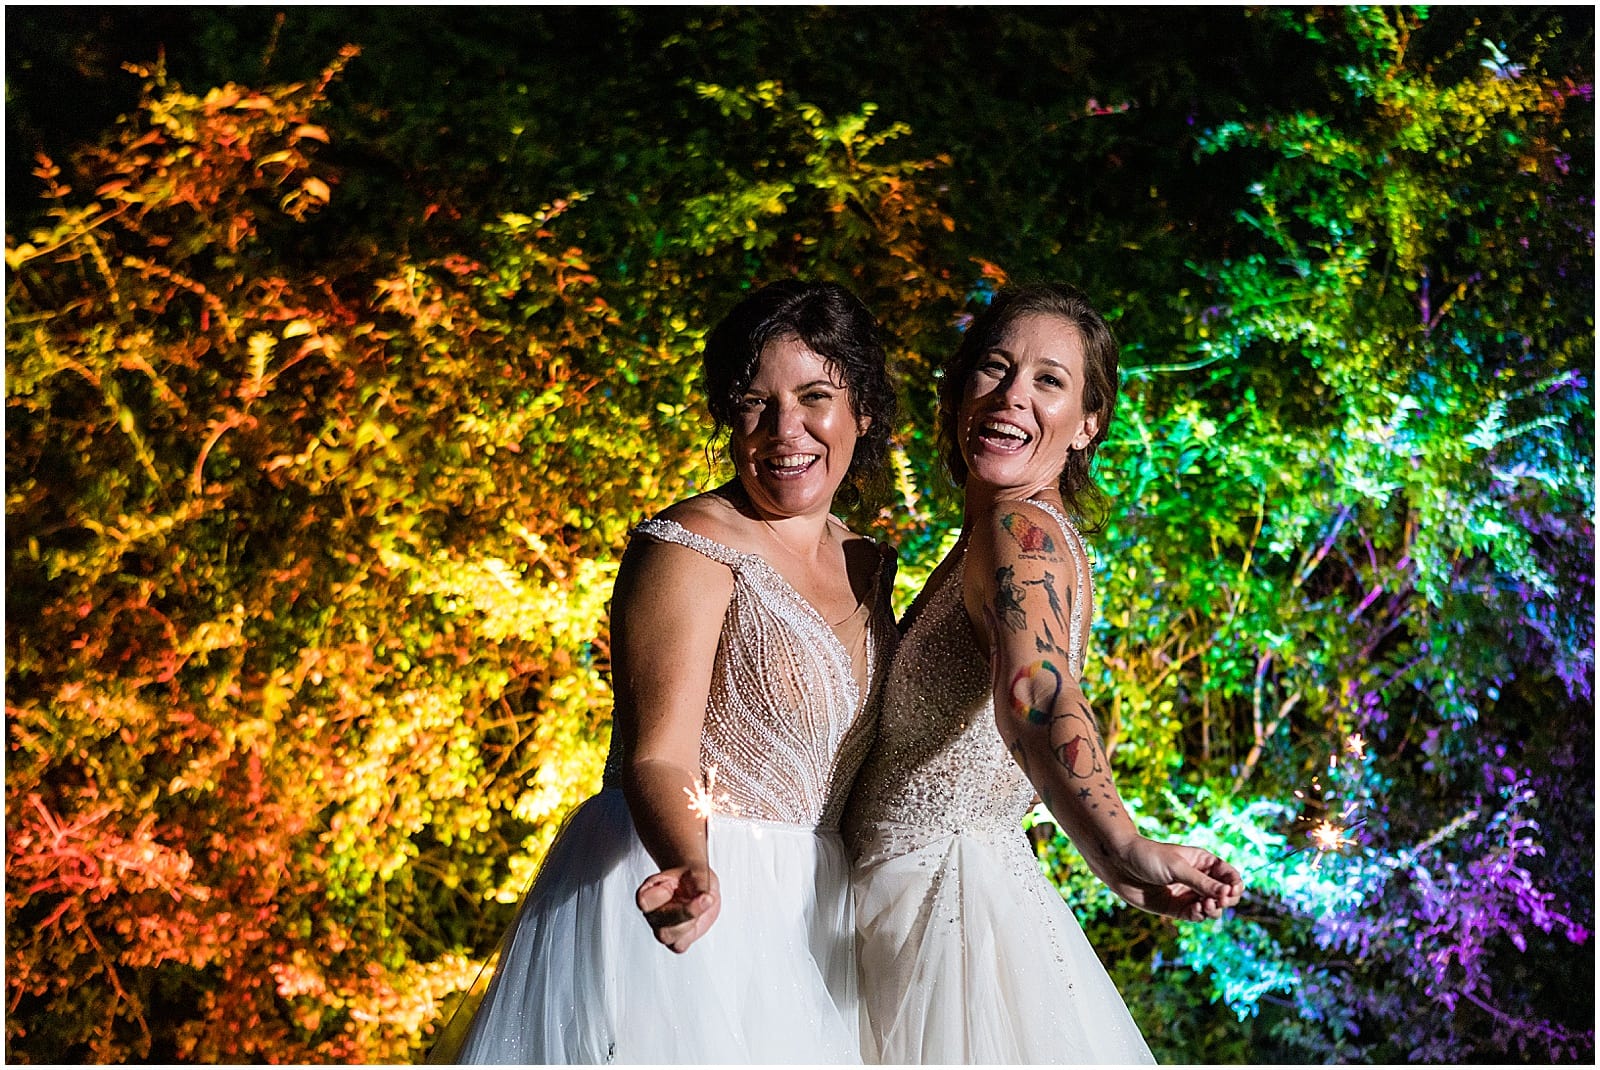 Brides light sparklers in front of rainbow lit trees at Bolingbroke Mansion same sex Pride wedding